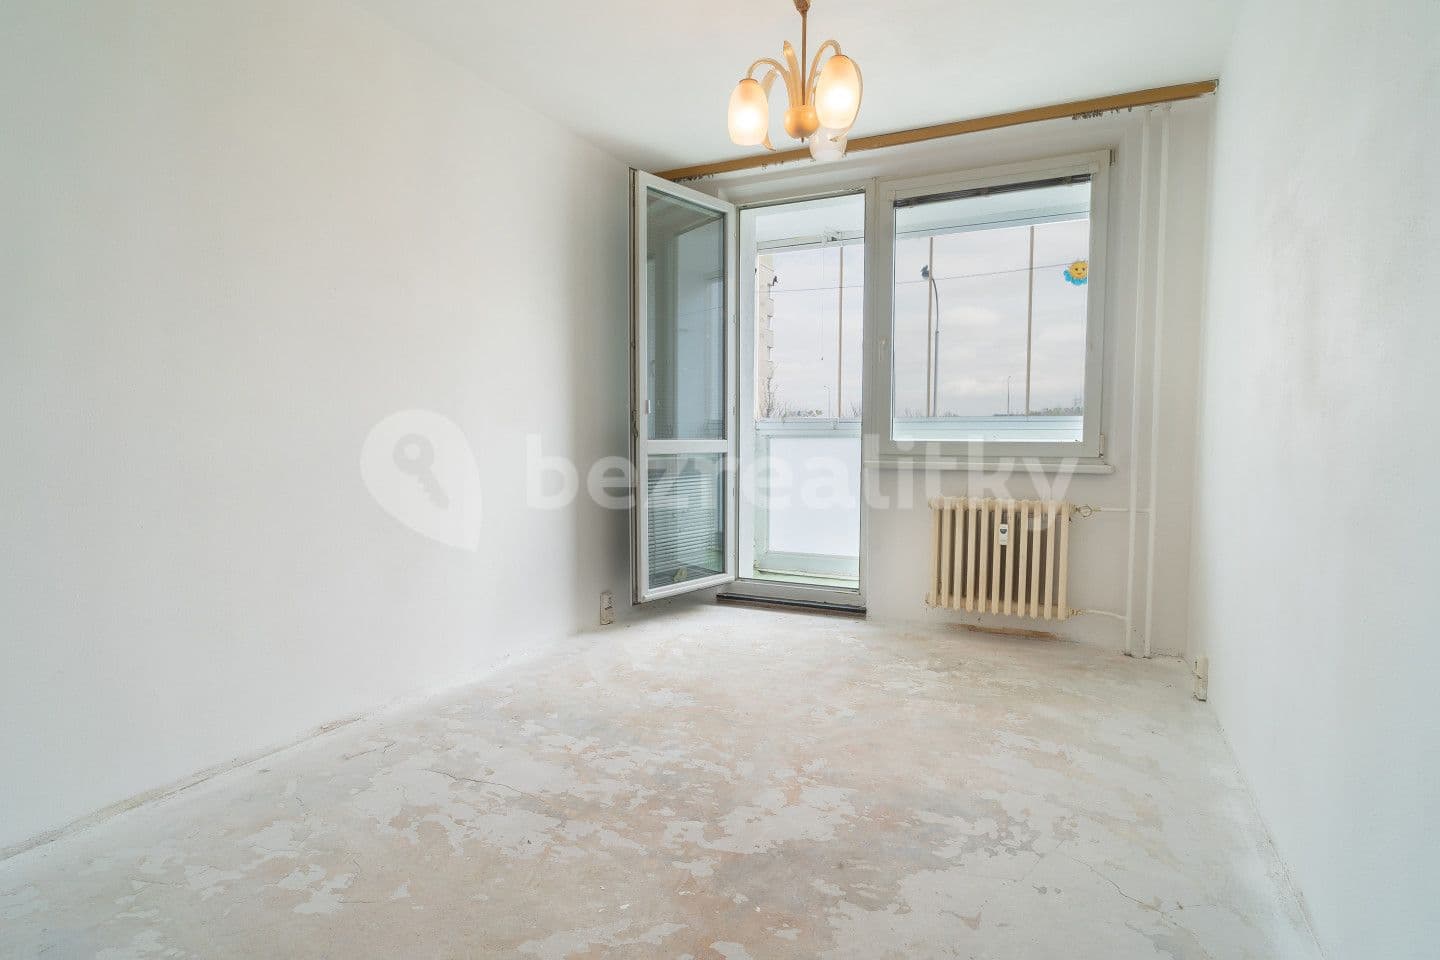 2 bedroom with open-plan kitchen flat for sale, 66 m², Janovská, Prague, Prague